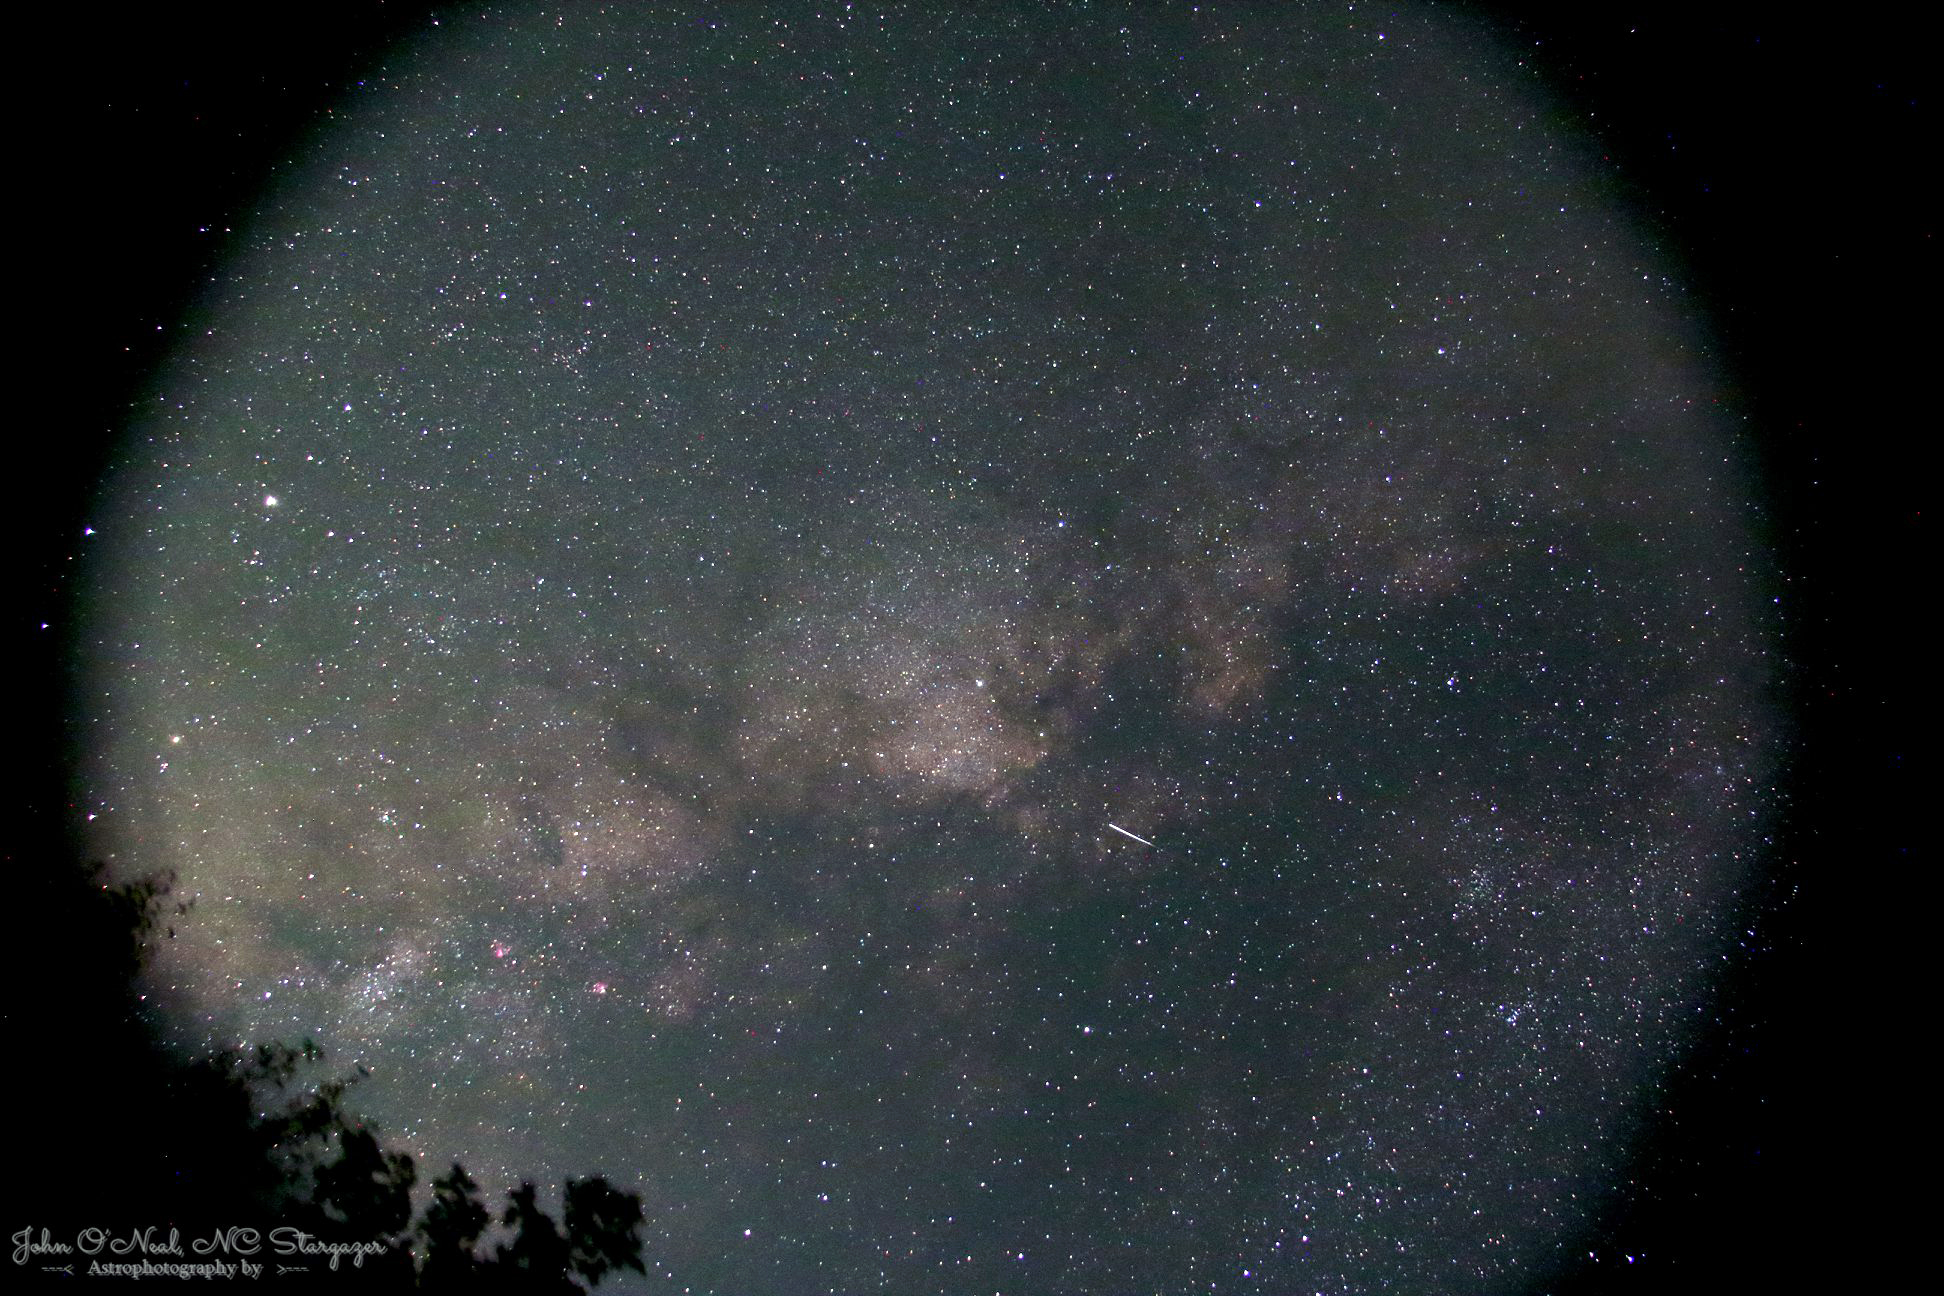 Binocular View of the Milky Way